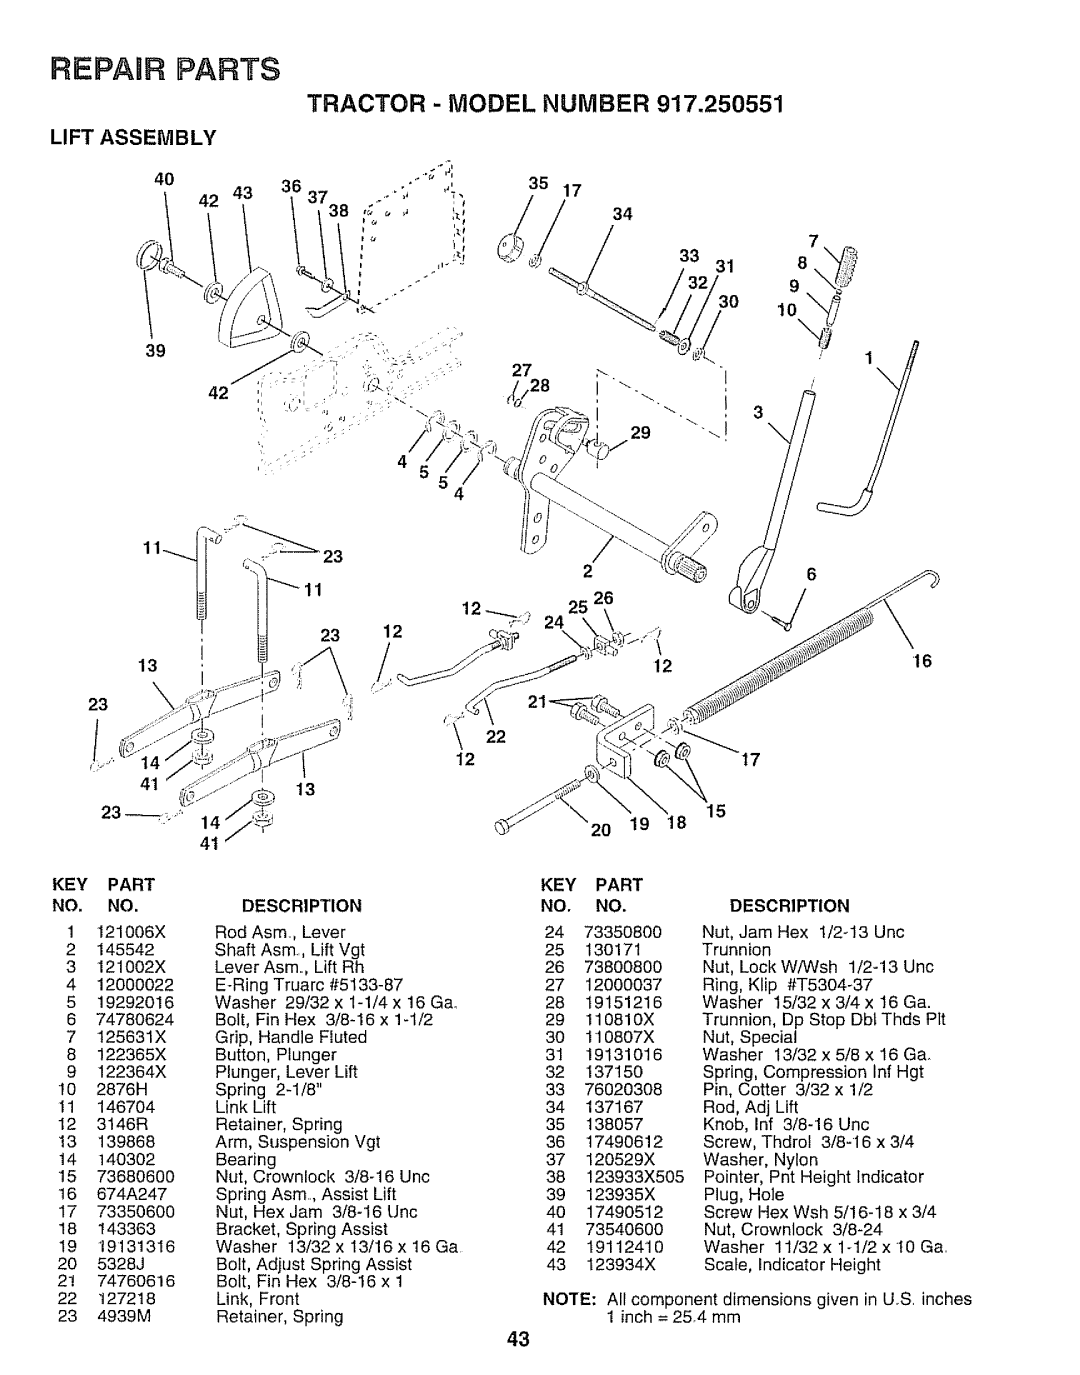 Sears 917.250551 manual Tractor - Model, Number, Lift Assembly, 34 33 31, 11 23, 23 22 12, Repair Parts, Description 